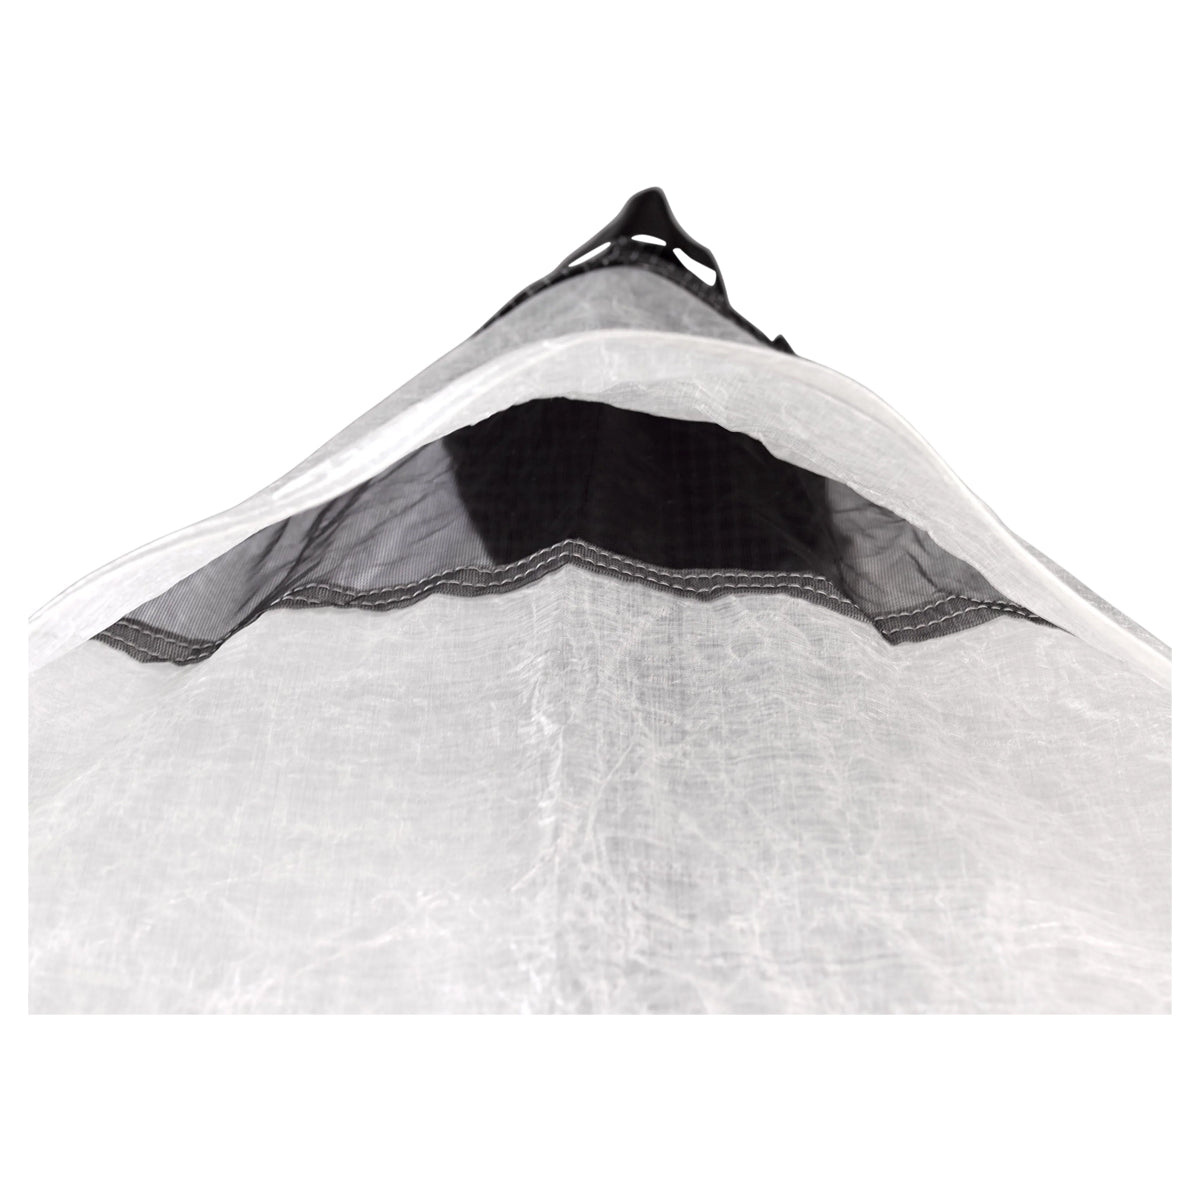 Hyperlite Mountain Gear UltaMid 4 - Ultralight Pyramid Tent